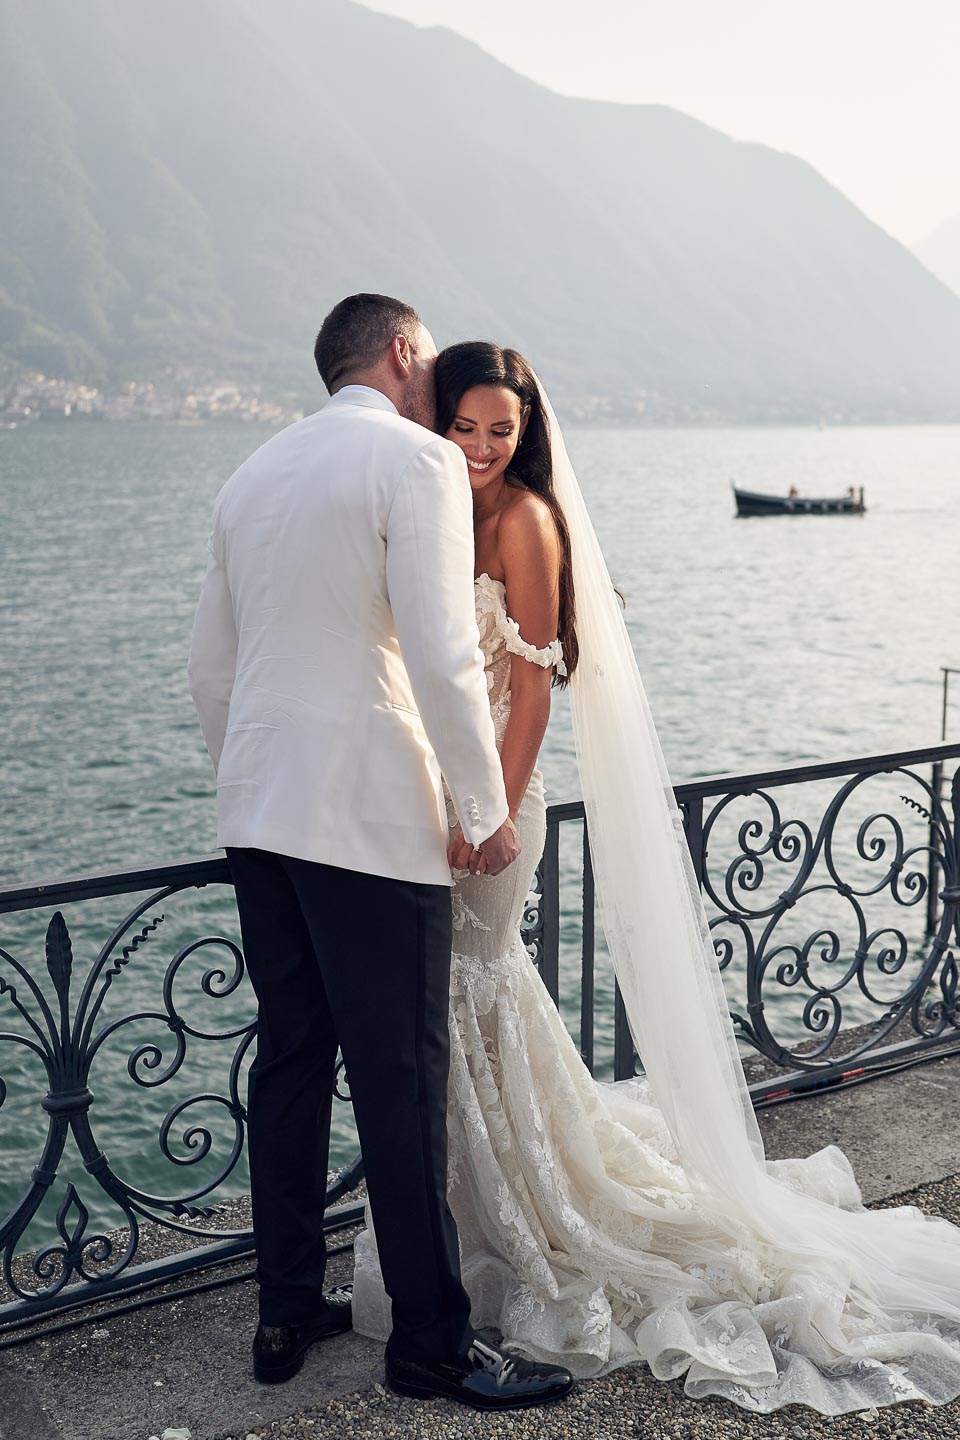 villa balbiano wedding in italy lake como destination wedding luxury event venue italy